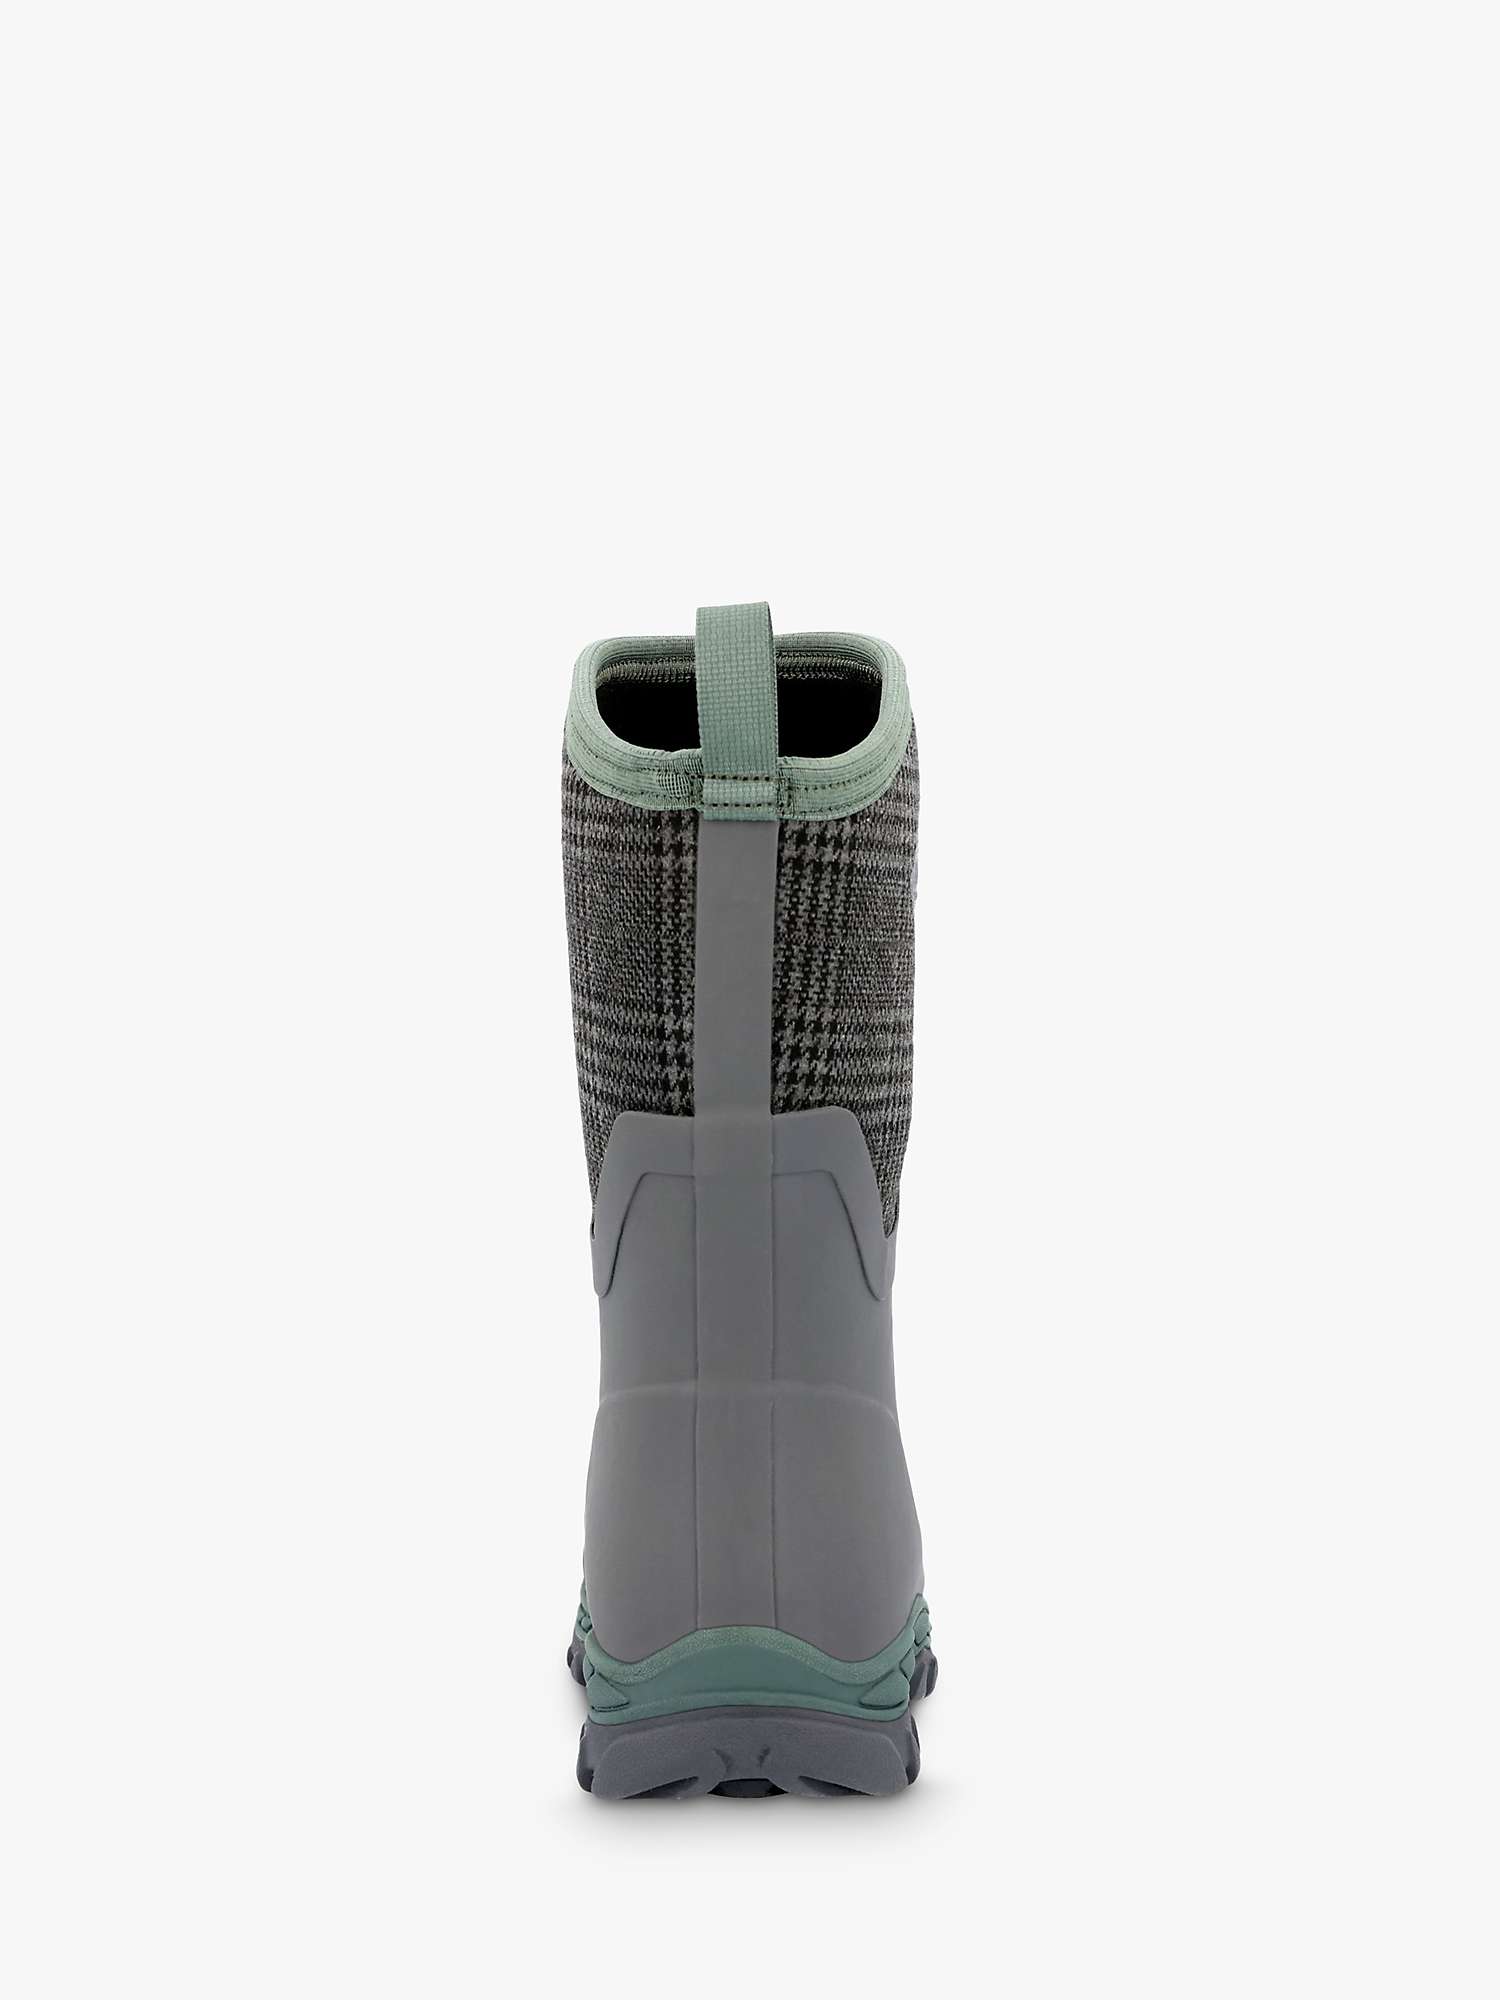 Buy Muck Arctic Sport II Mid Boots, Grey/Plaid Online at johnlewis.com